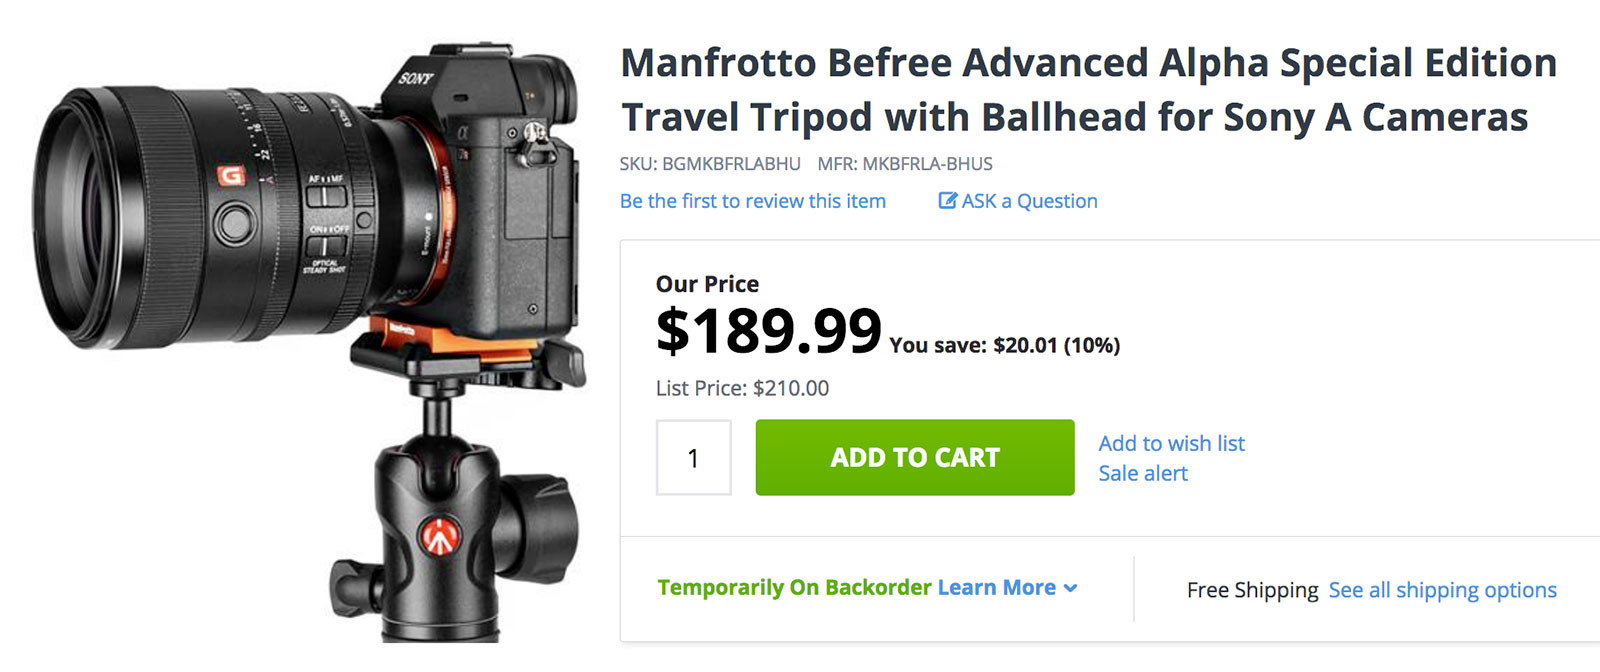 Manfrotto-Befree-Advanced-Alpha-Special-Edition-Travel-Tripod-Adorama